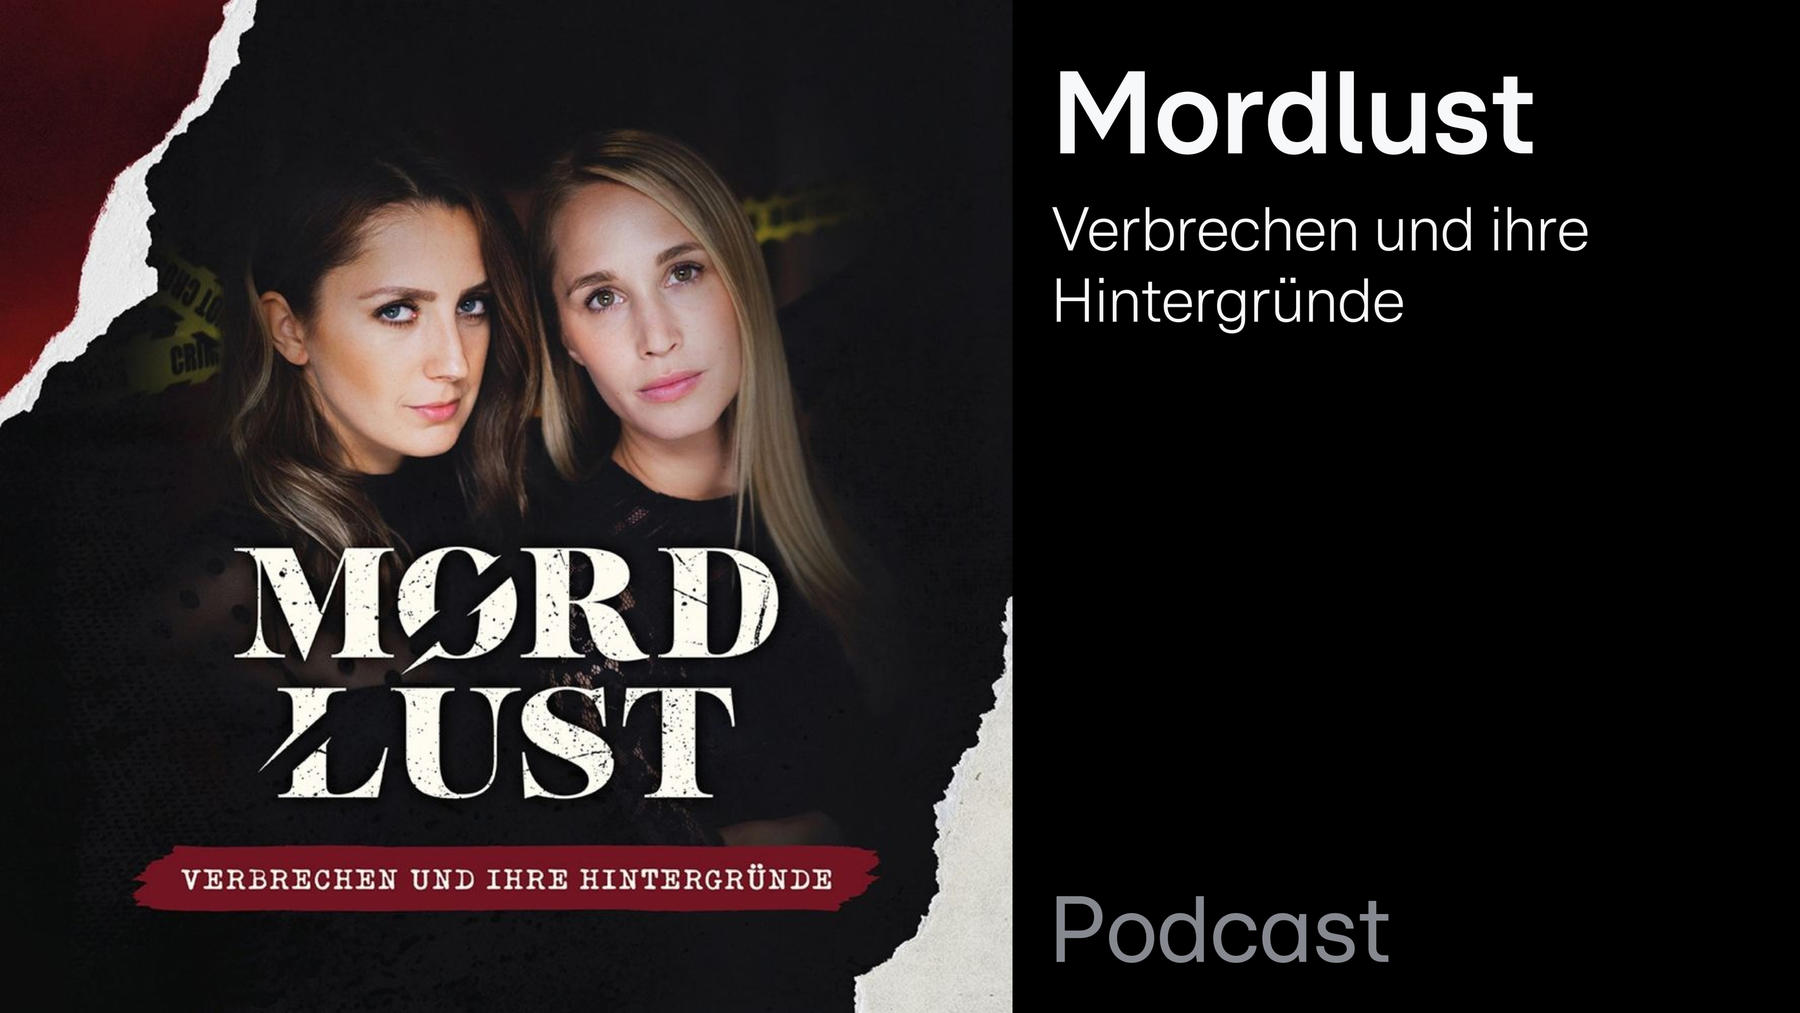 Podcast: Mordlust